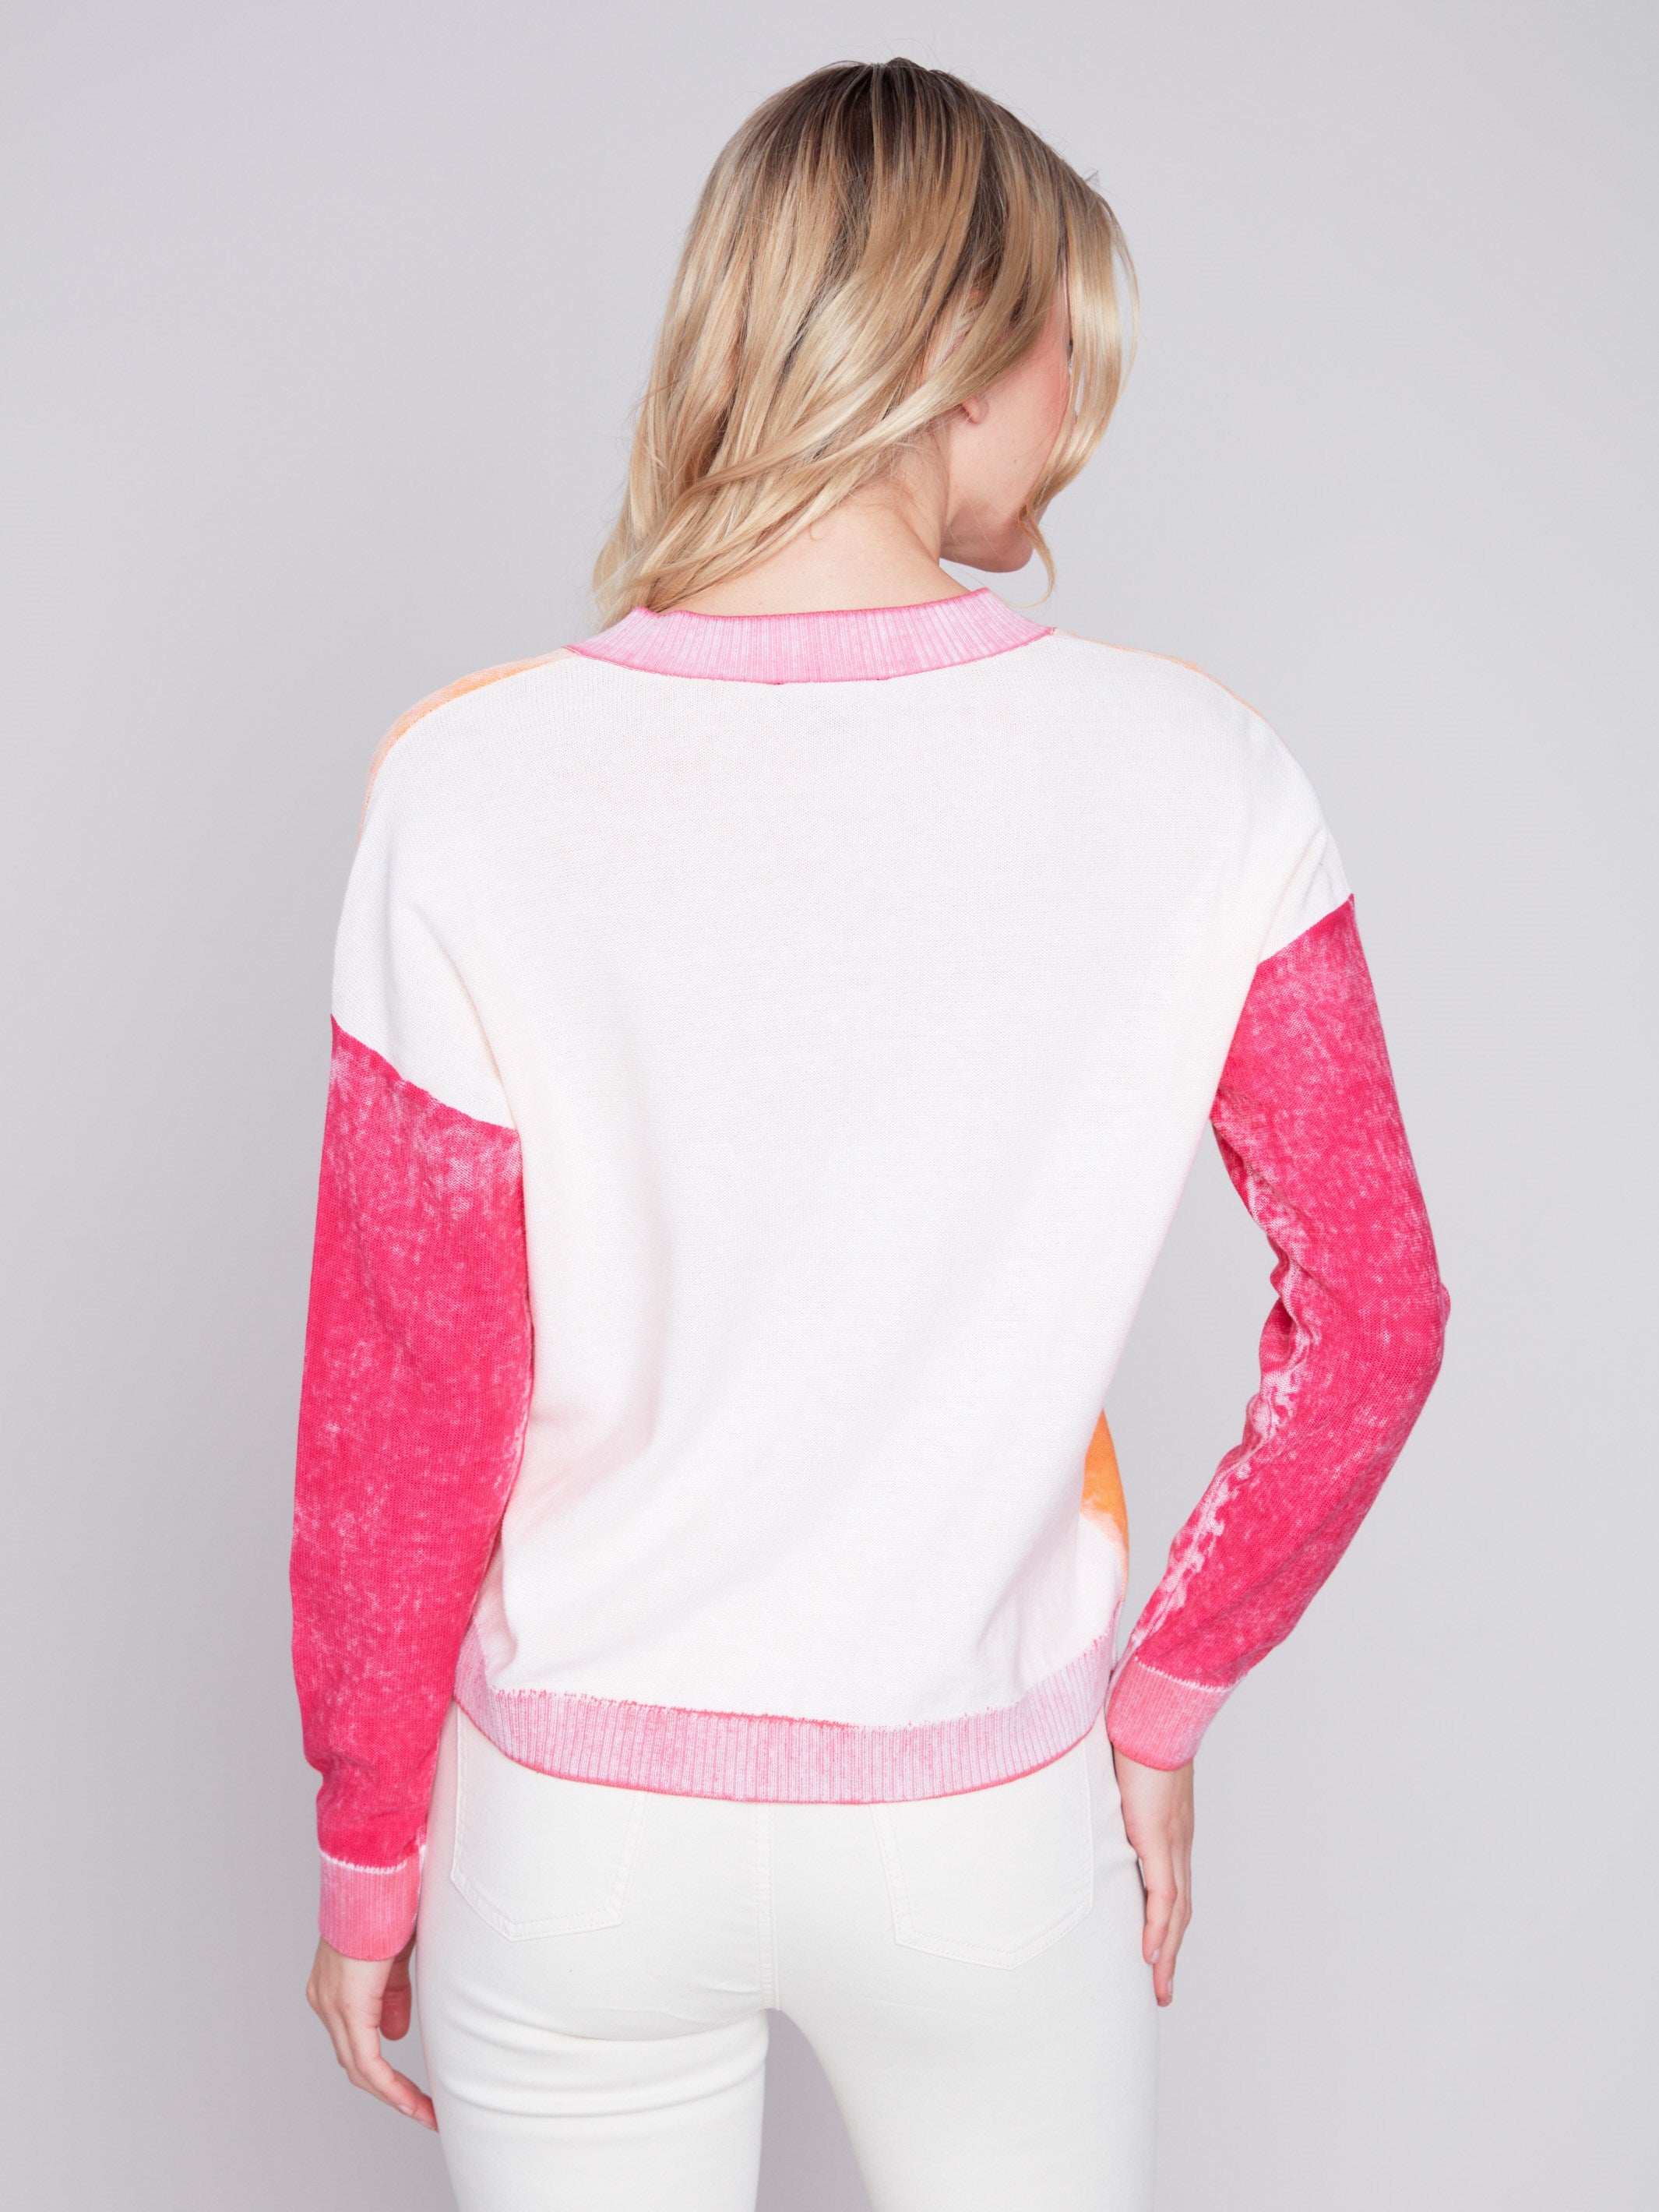 Charlie B Color Block Cotton Sweater - Tangerine - Image 2